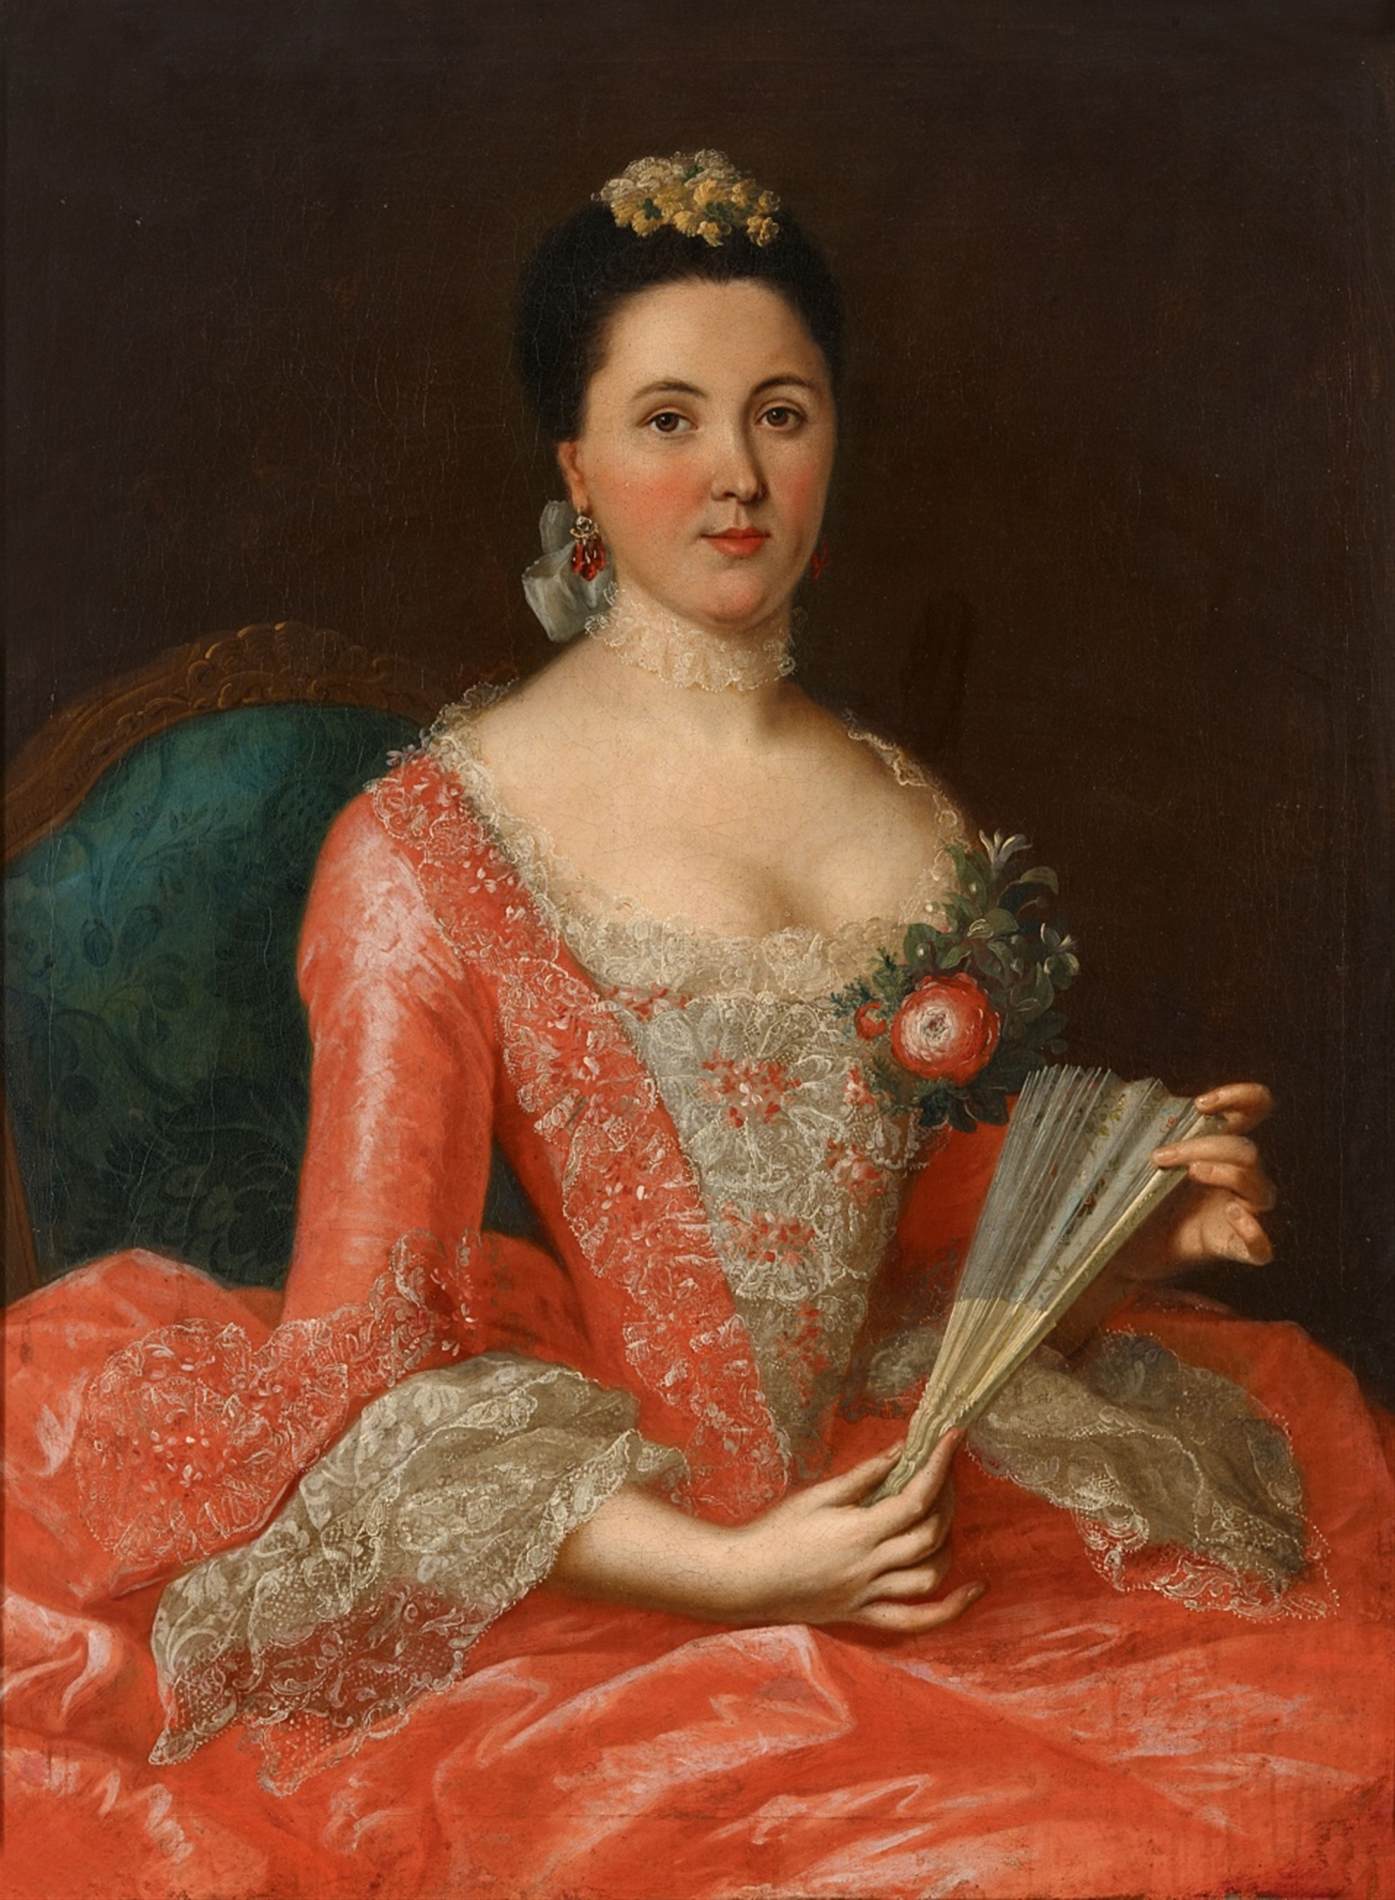 Portrait of an Aristocratic Lady